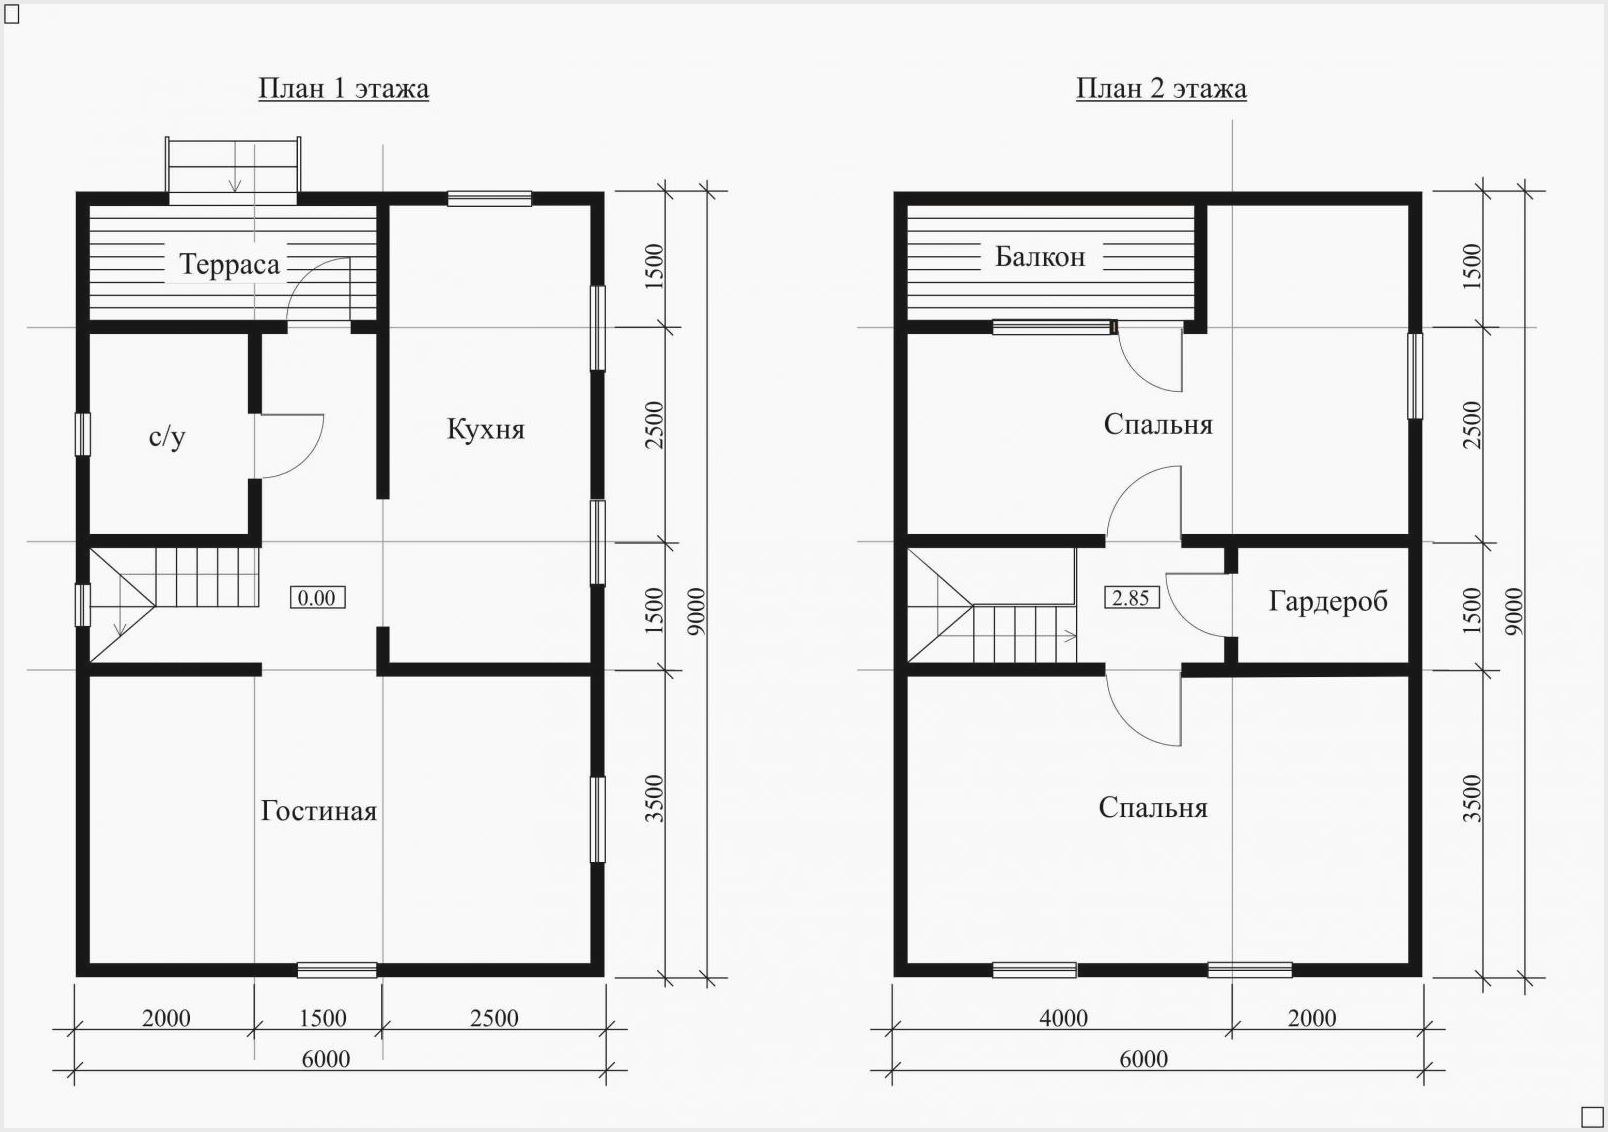 Схема домов 2 этажа. Схема 2х этажного дома. Чертёж 2-х этажного дома с размерами. Чертеж дом 2 этажа. Чертеж небольшого двухэтажного дома.